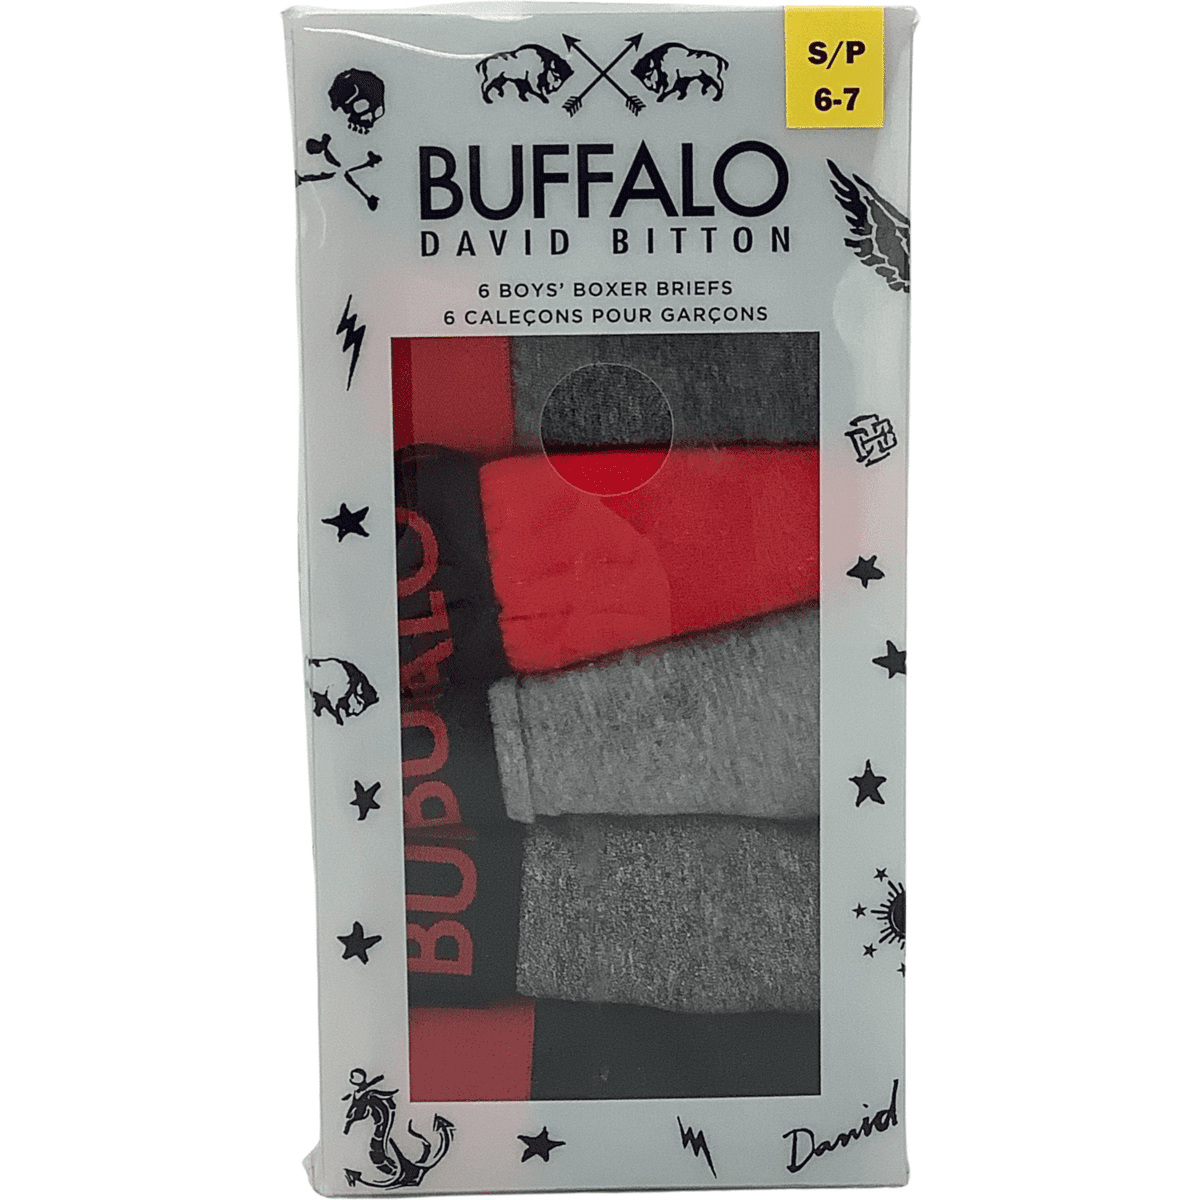 Buffalo David Bitton Boy's Boxer Briefs in red and Grey_01